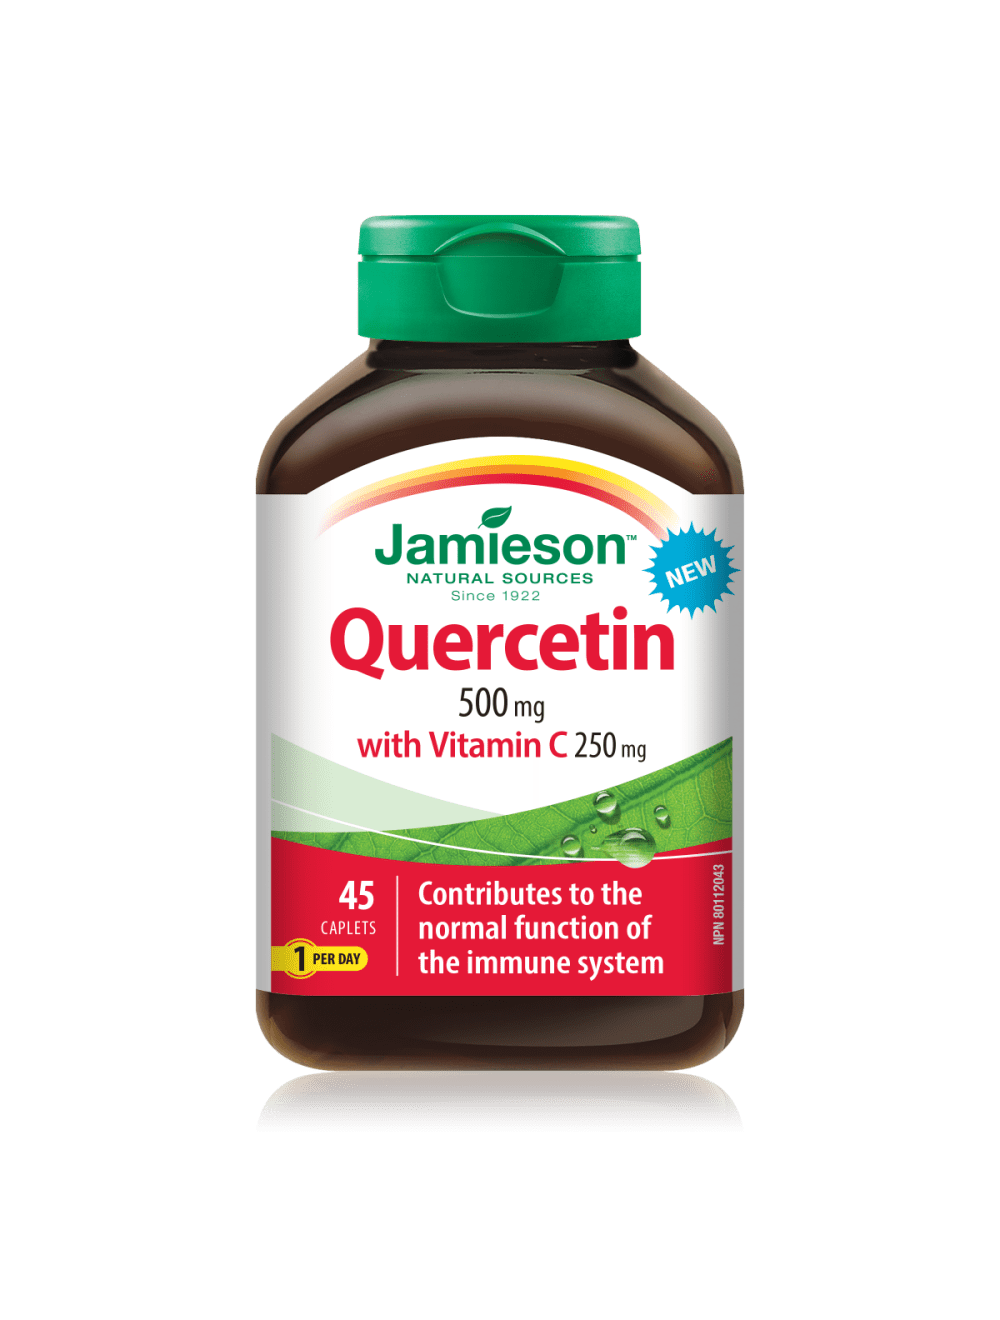 Jamieson Kvercetin 500 mg in vitamin C 250 mg tablete, 45 tablet